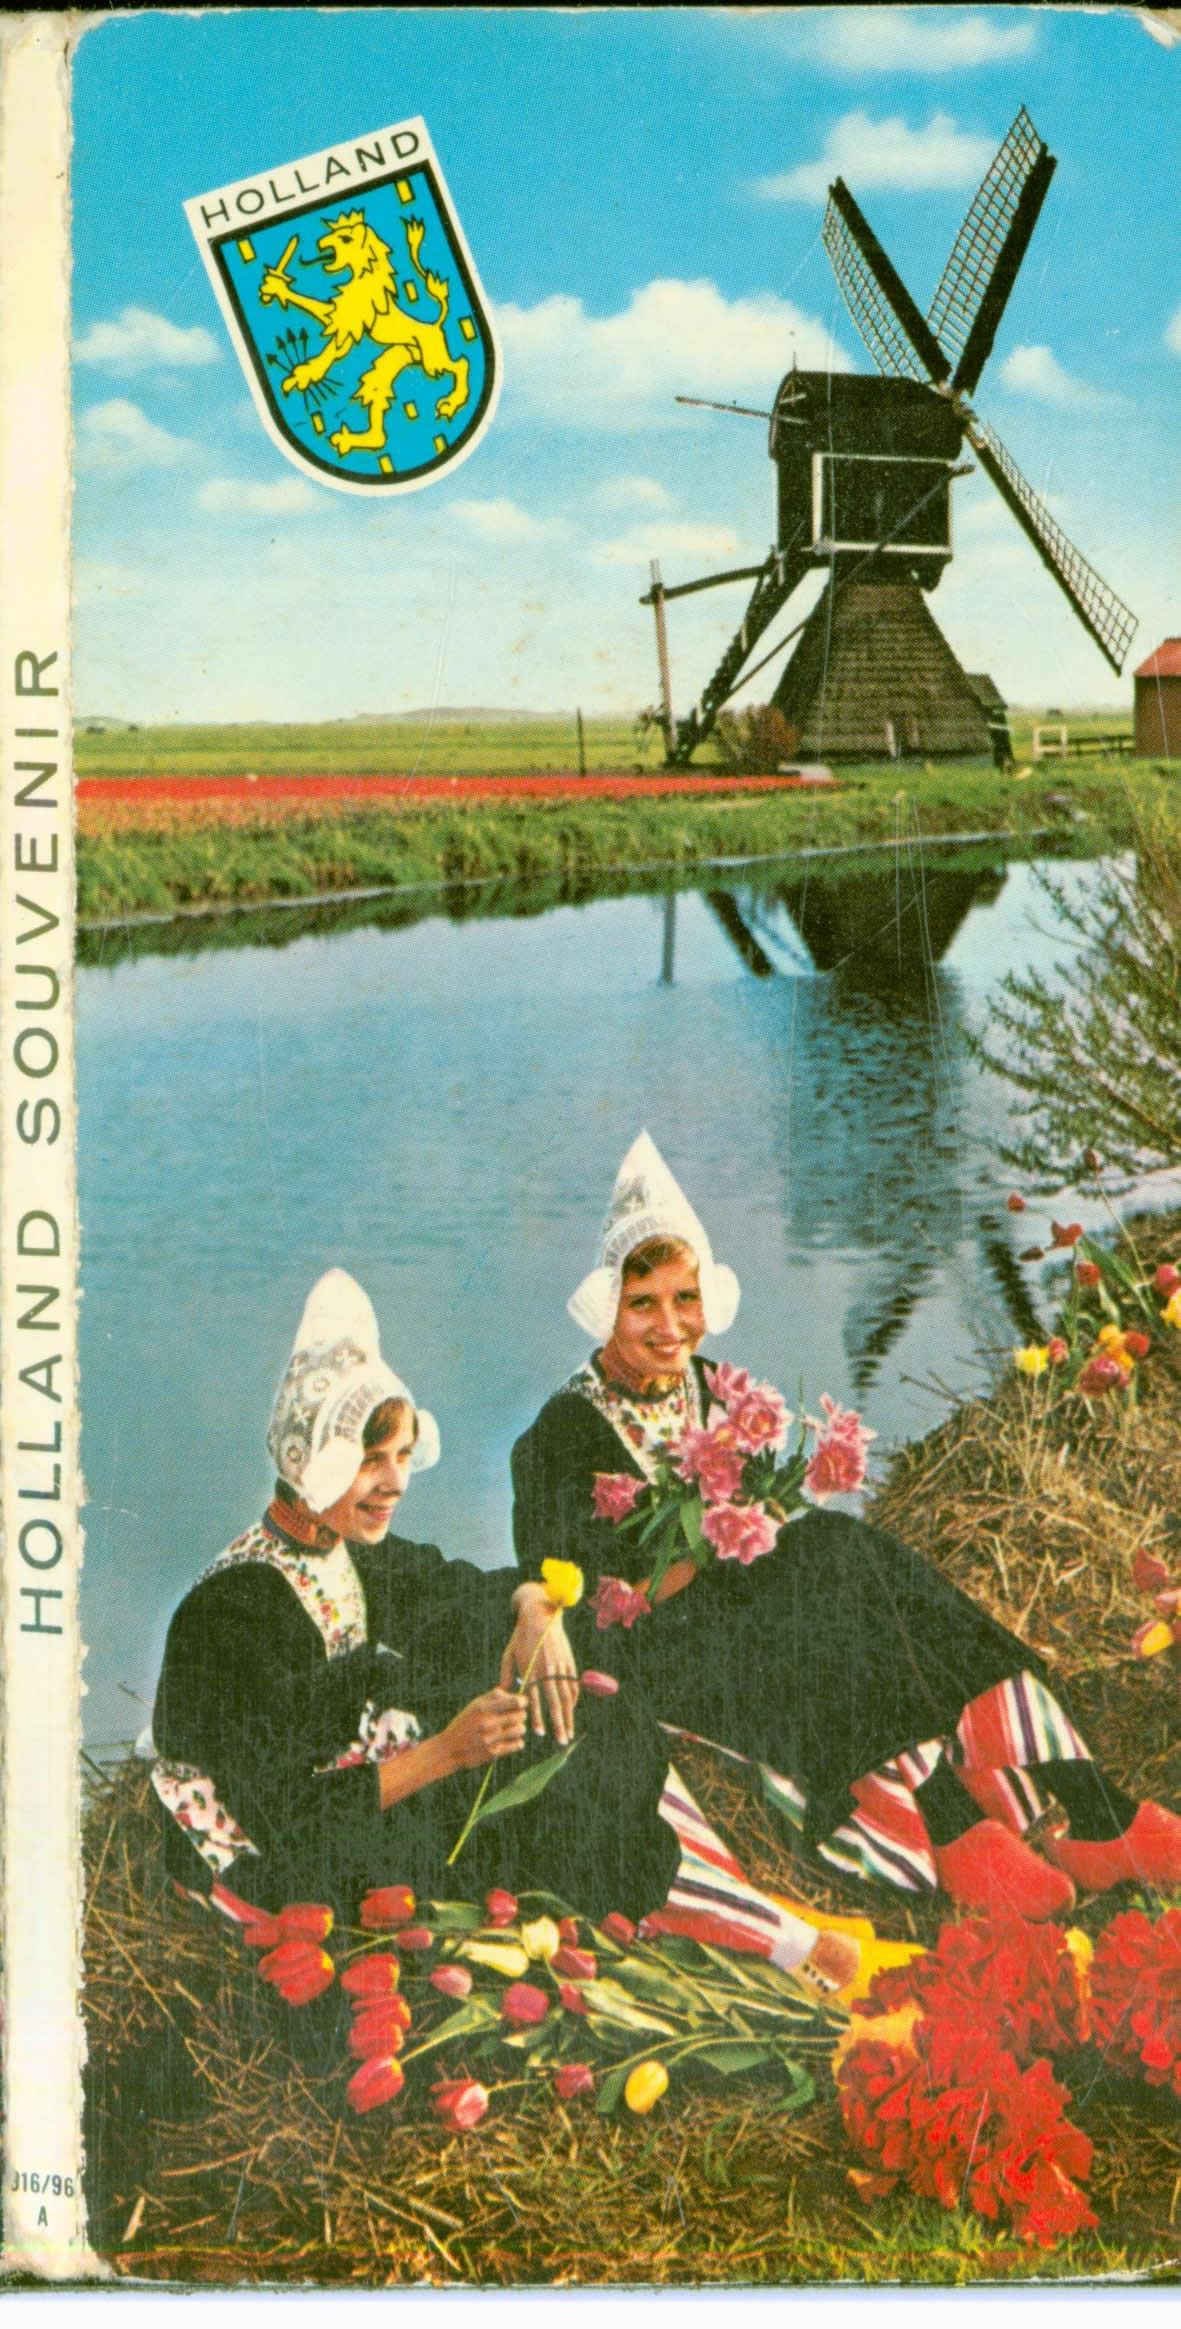 Cartes postales anciennes > CARTES POSTALES > carte postale ancienne > cartes-postales-ancienne.com Lots cartes postales Pays bas